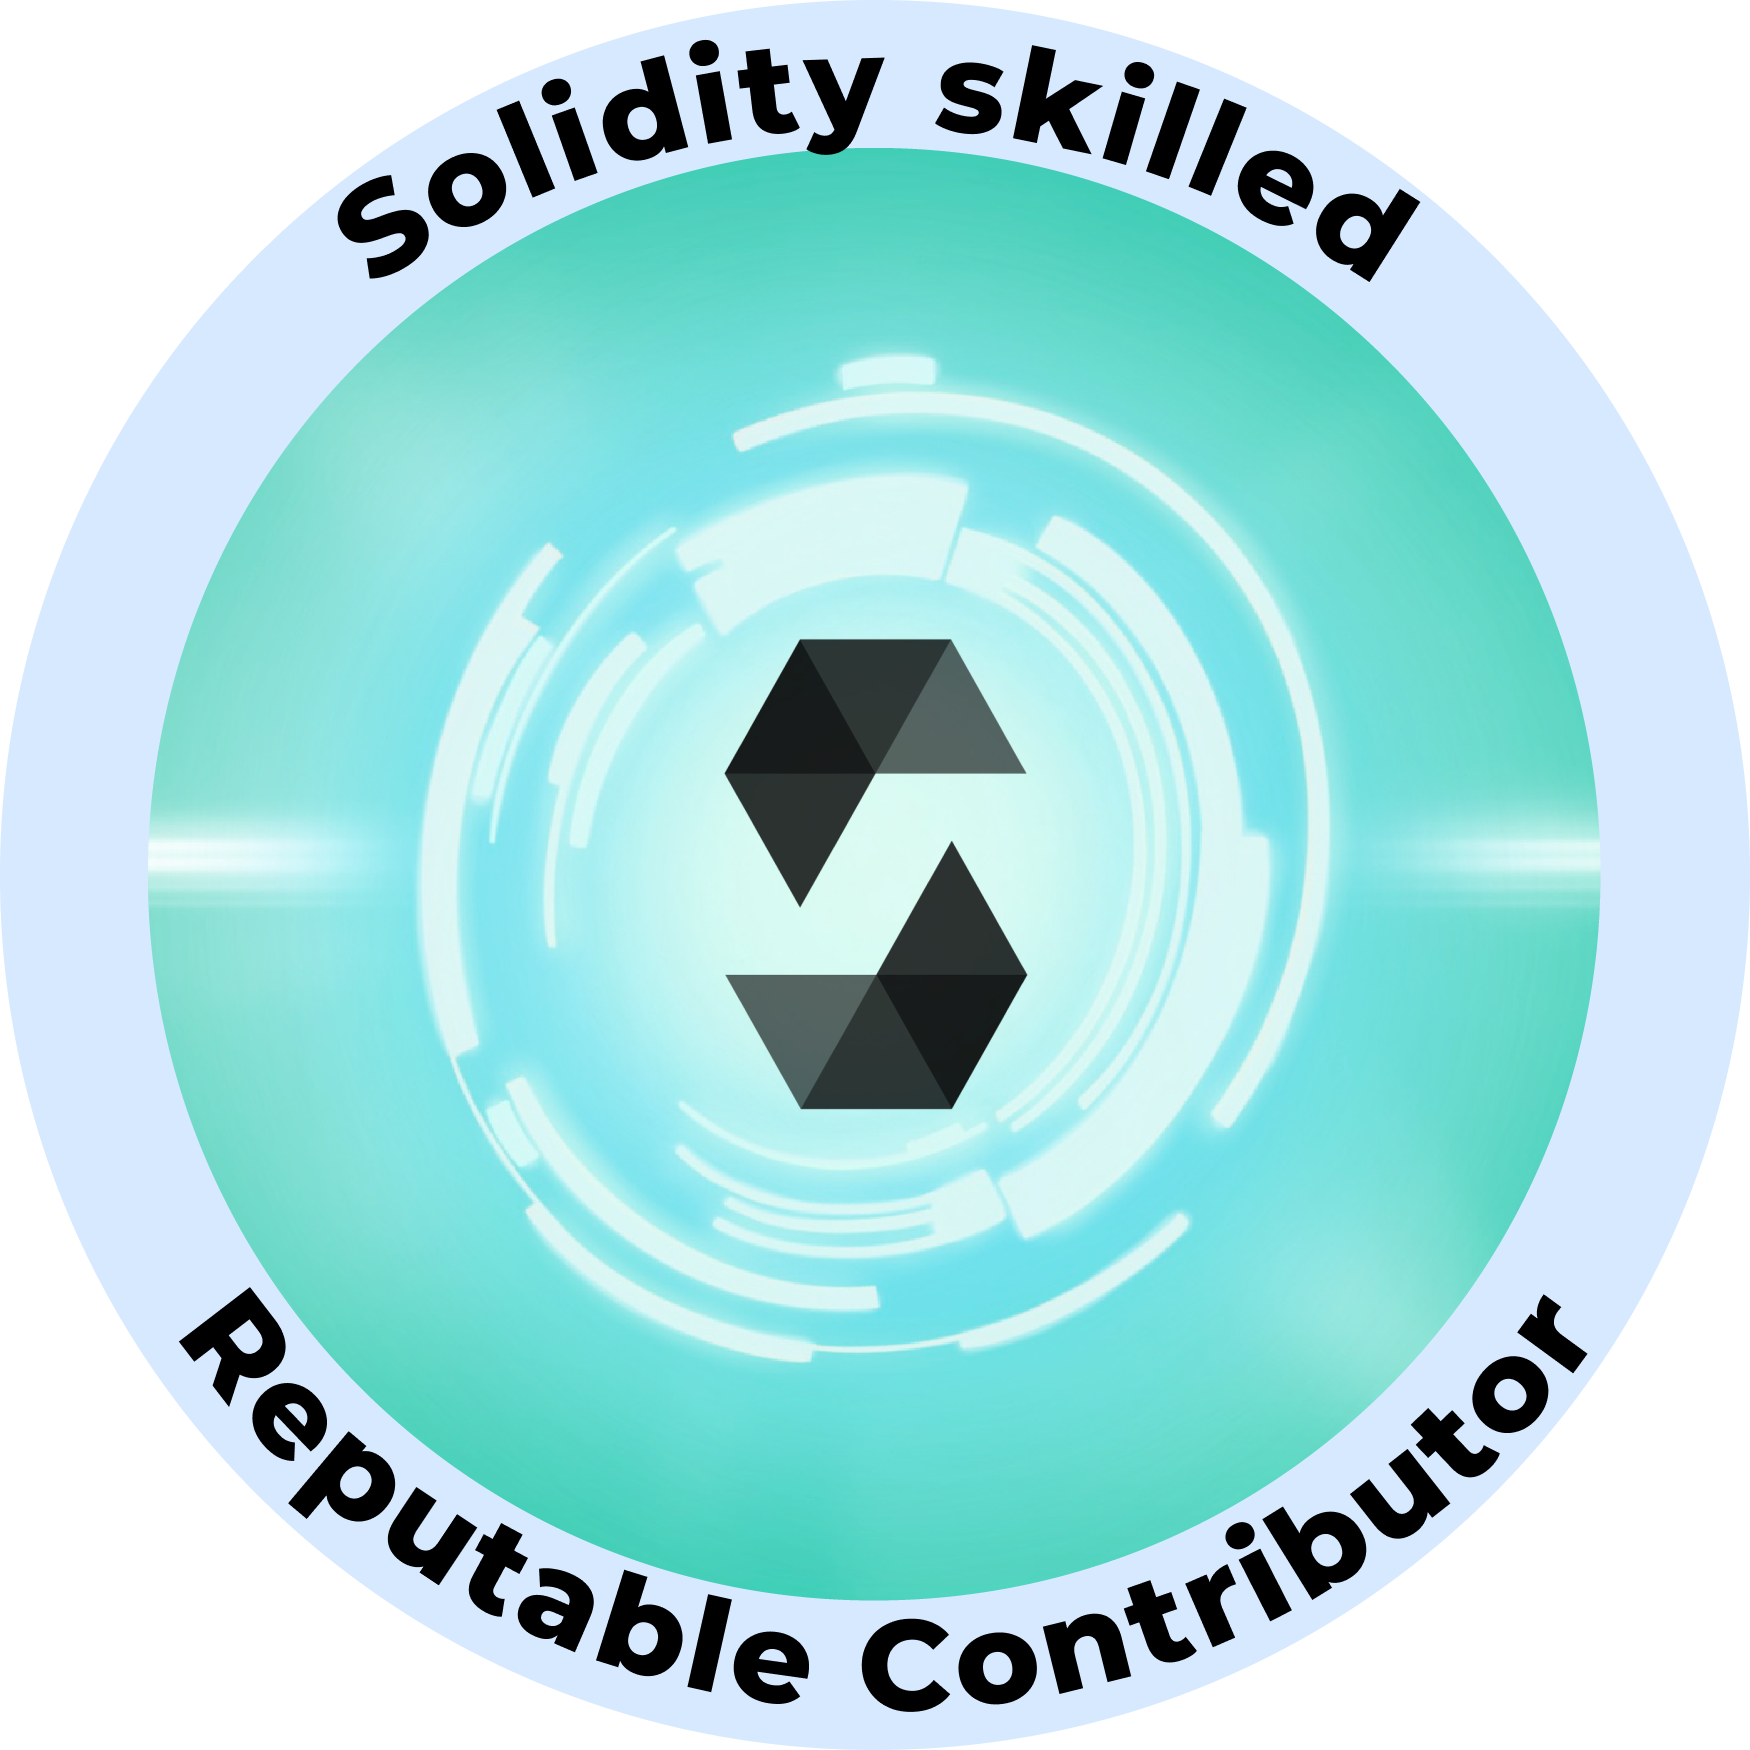 Web3 Badge | Reputable Solidity Skilled Contributor logo